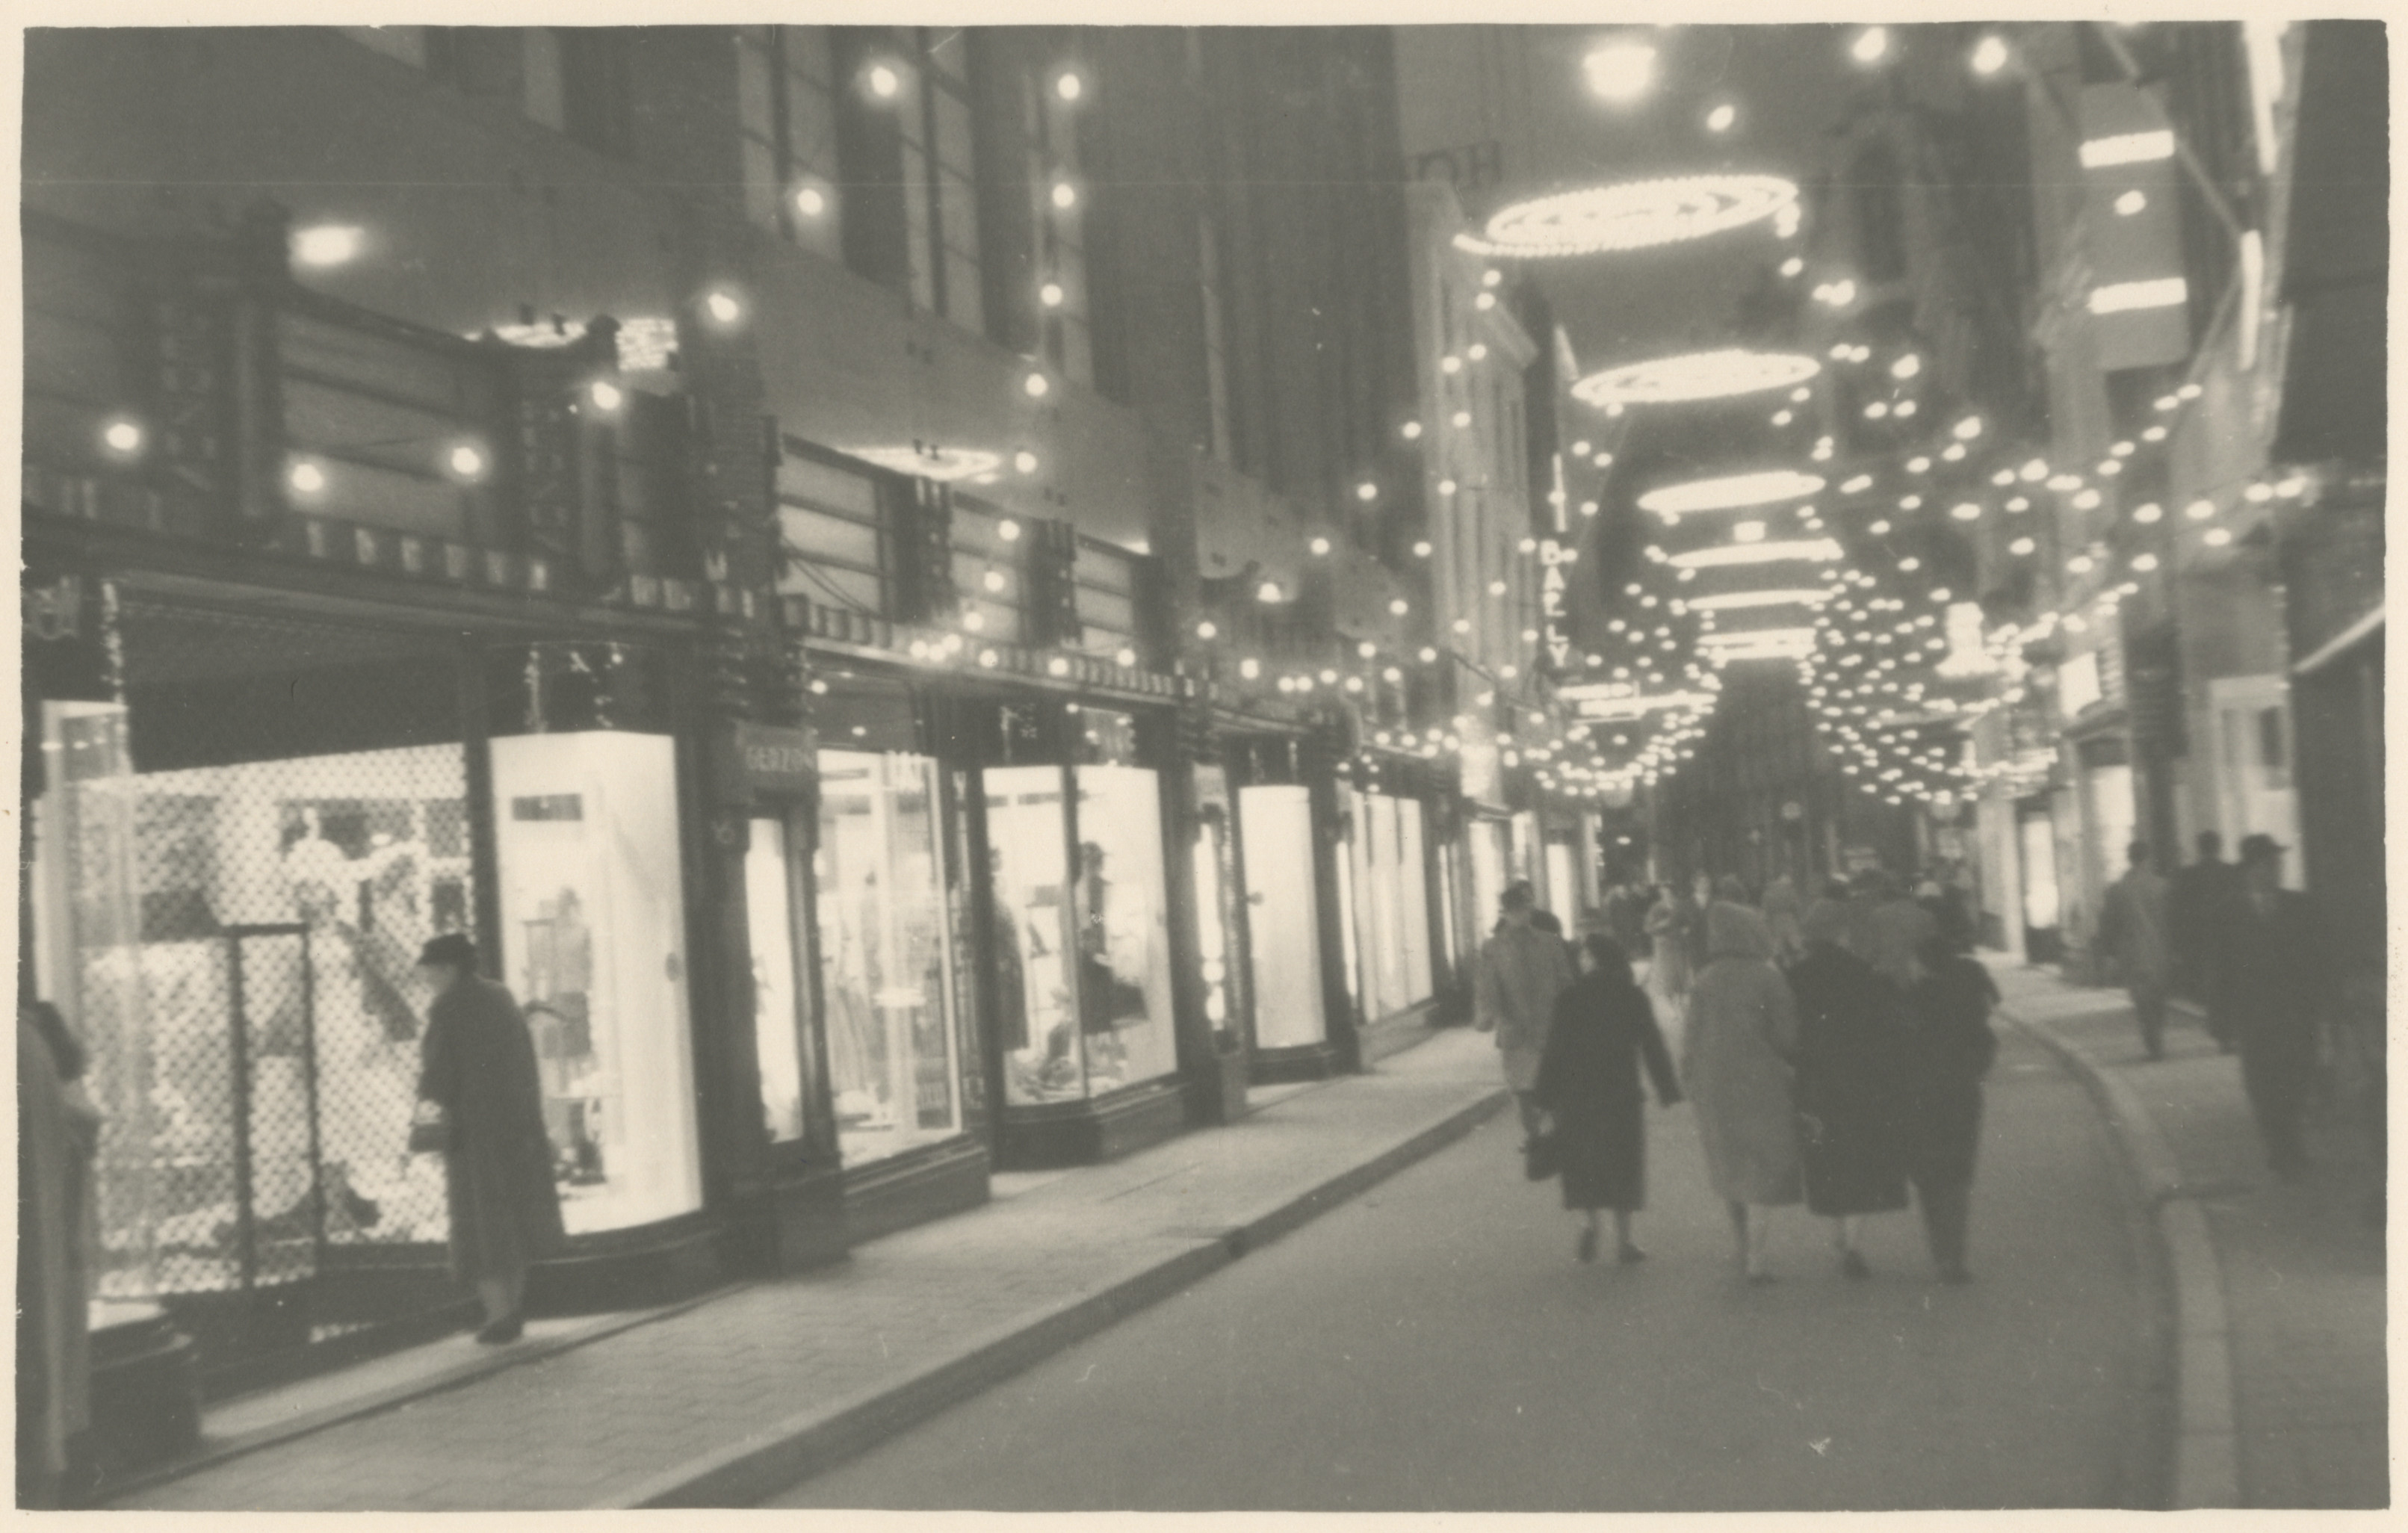 Venestraat met feestverlichting. Maker: J. Blackstone, 1950